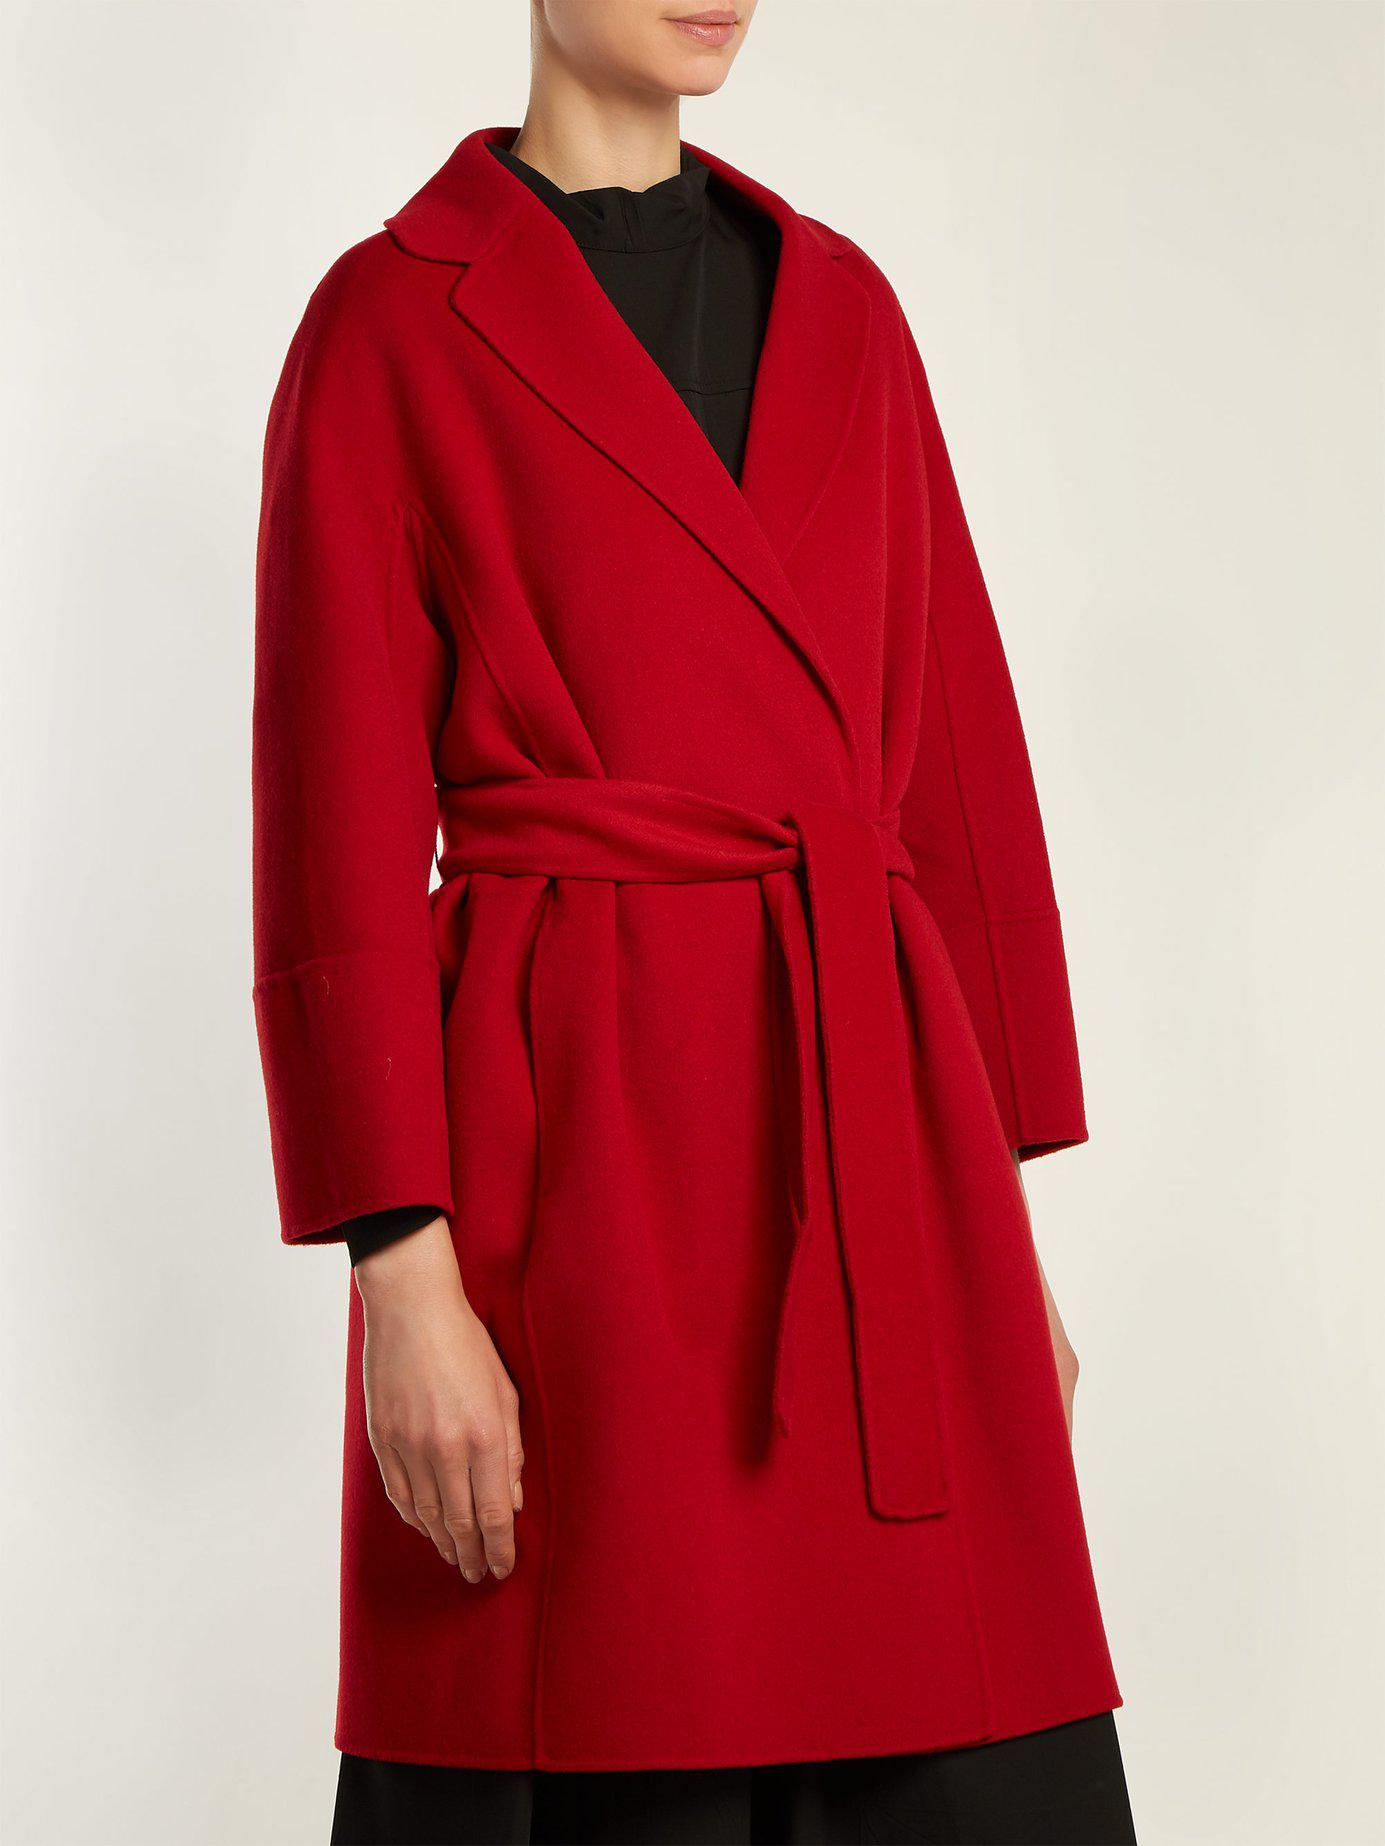 Max Mara Arona Wool Coat in Red - Lyst